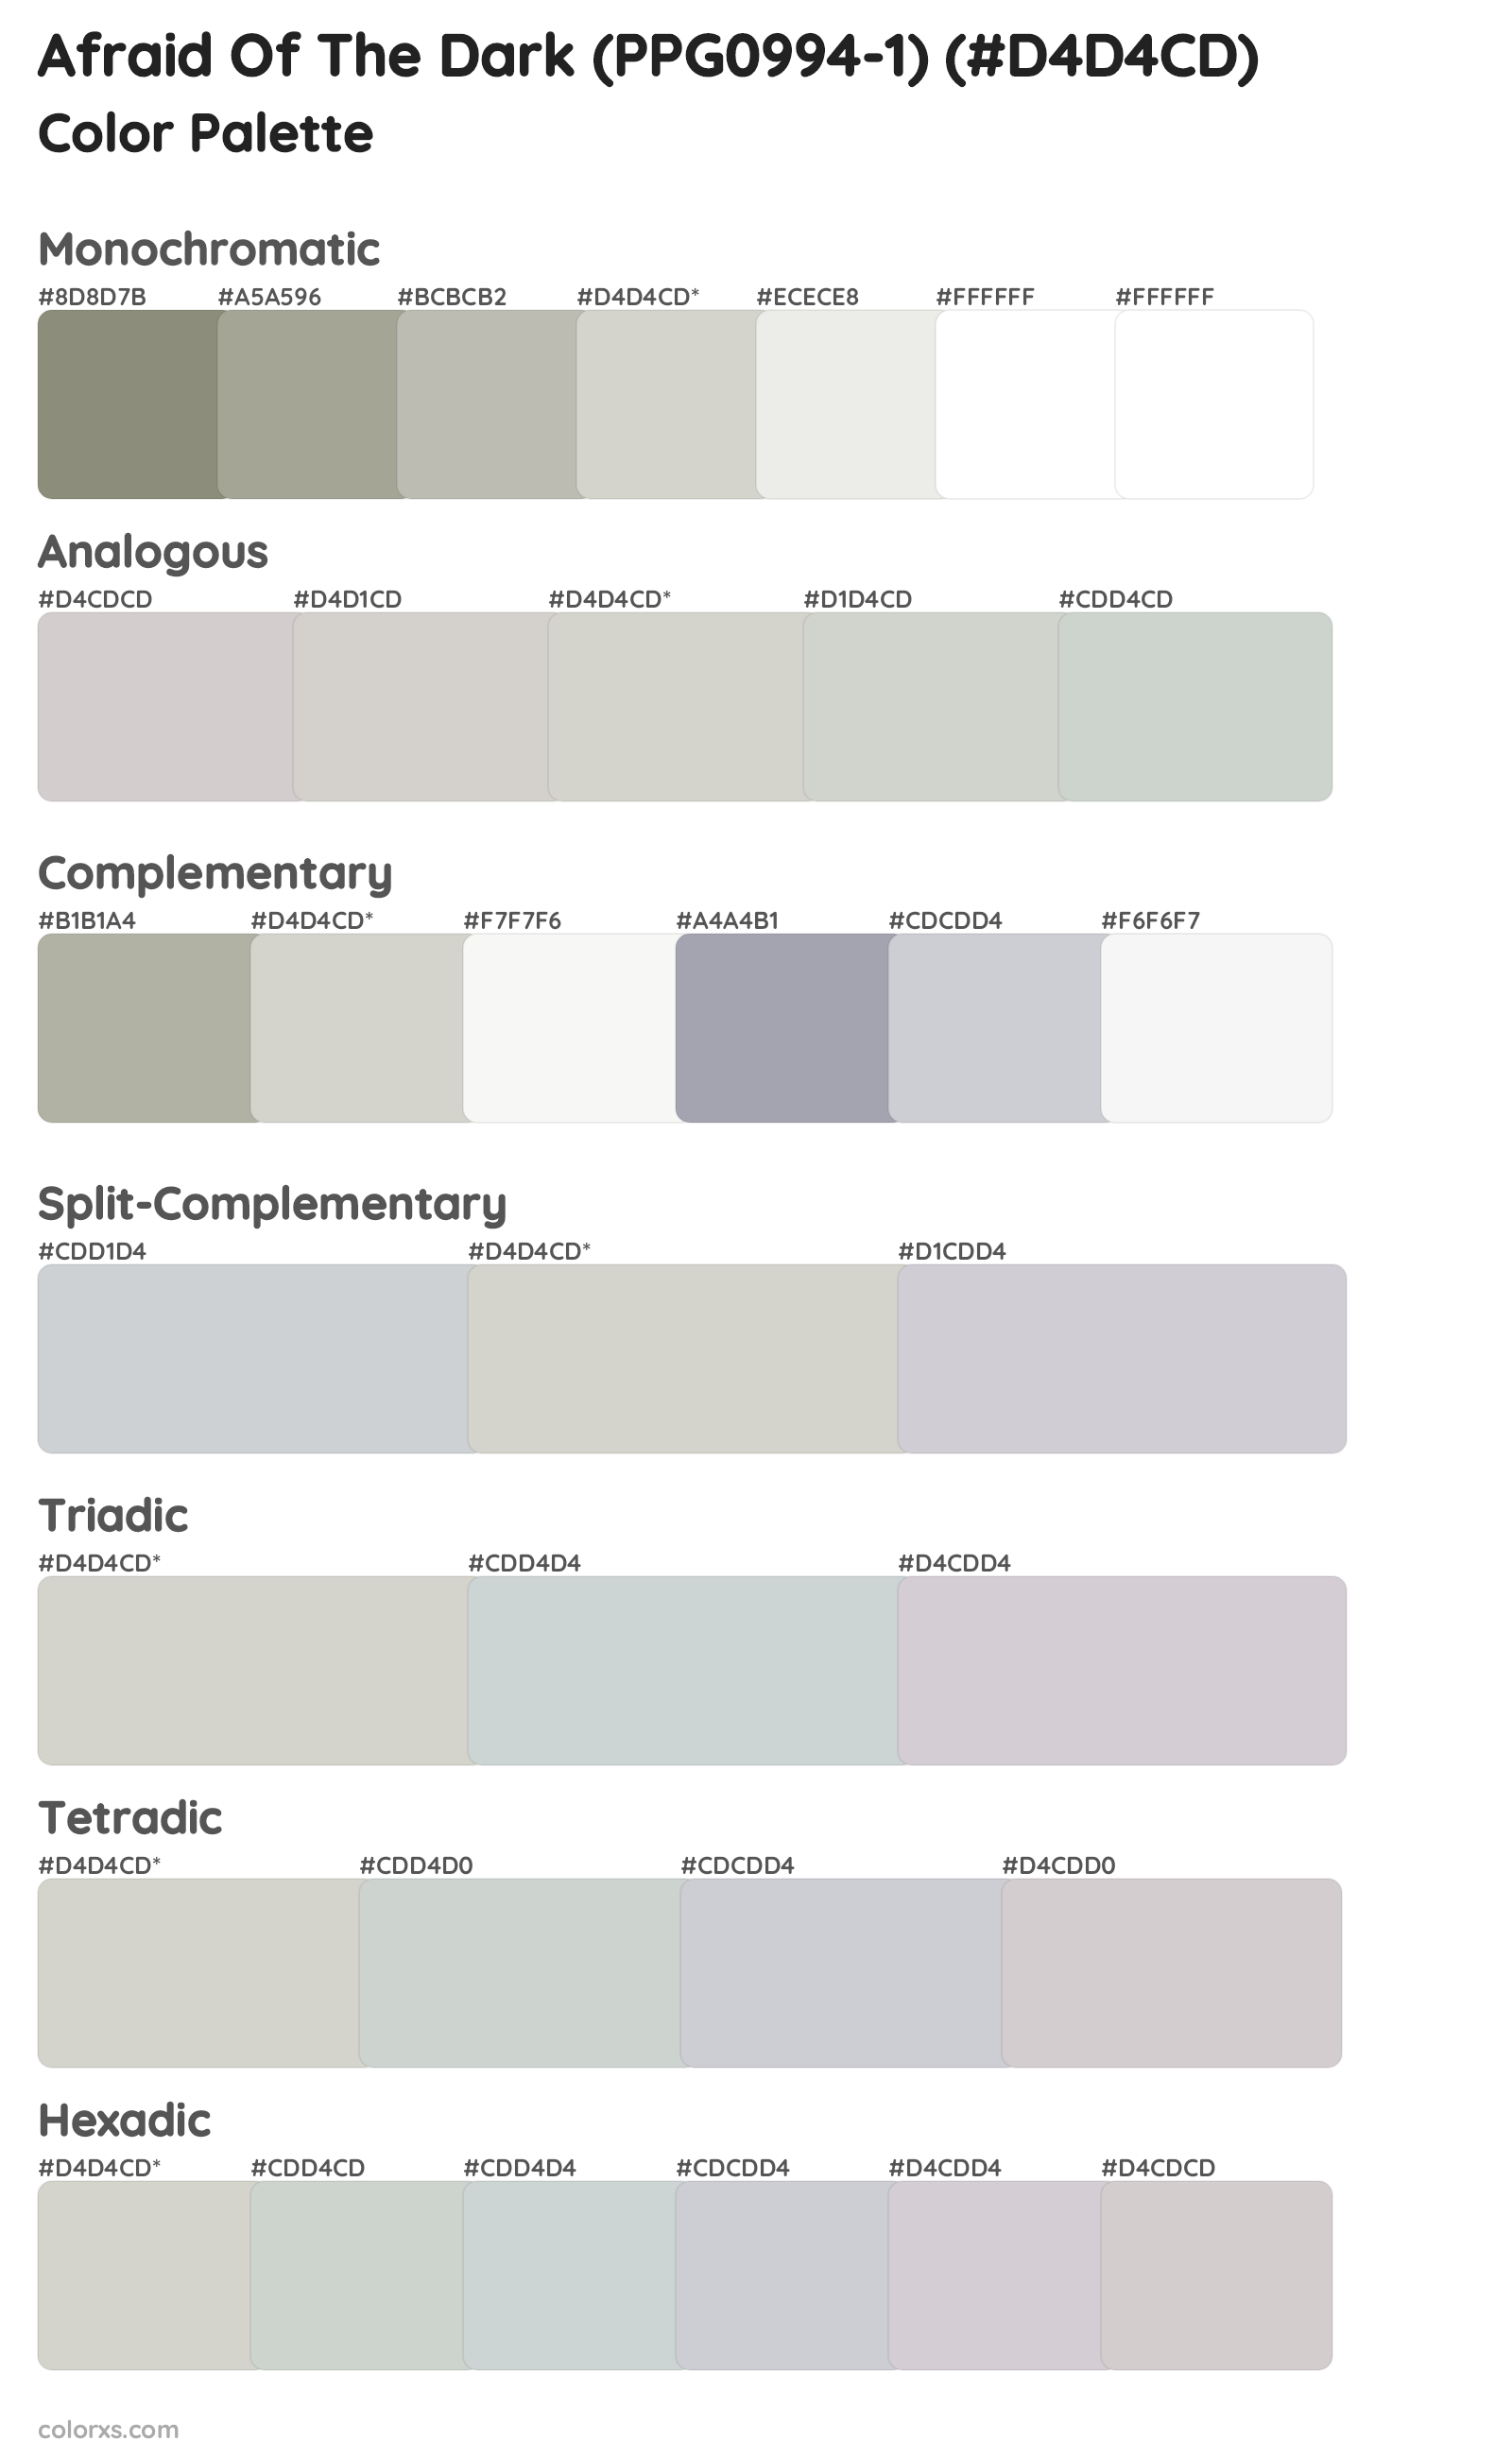 Afraid Of The Dark (PPG0994-1) Color Scheme Palettes